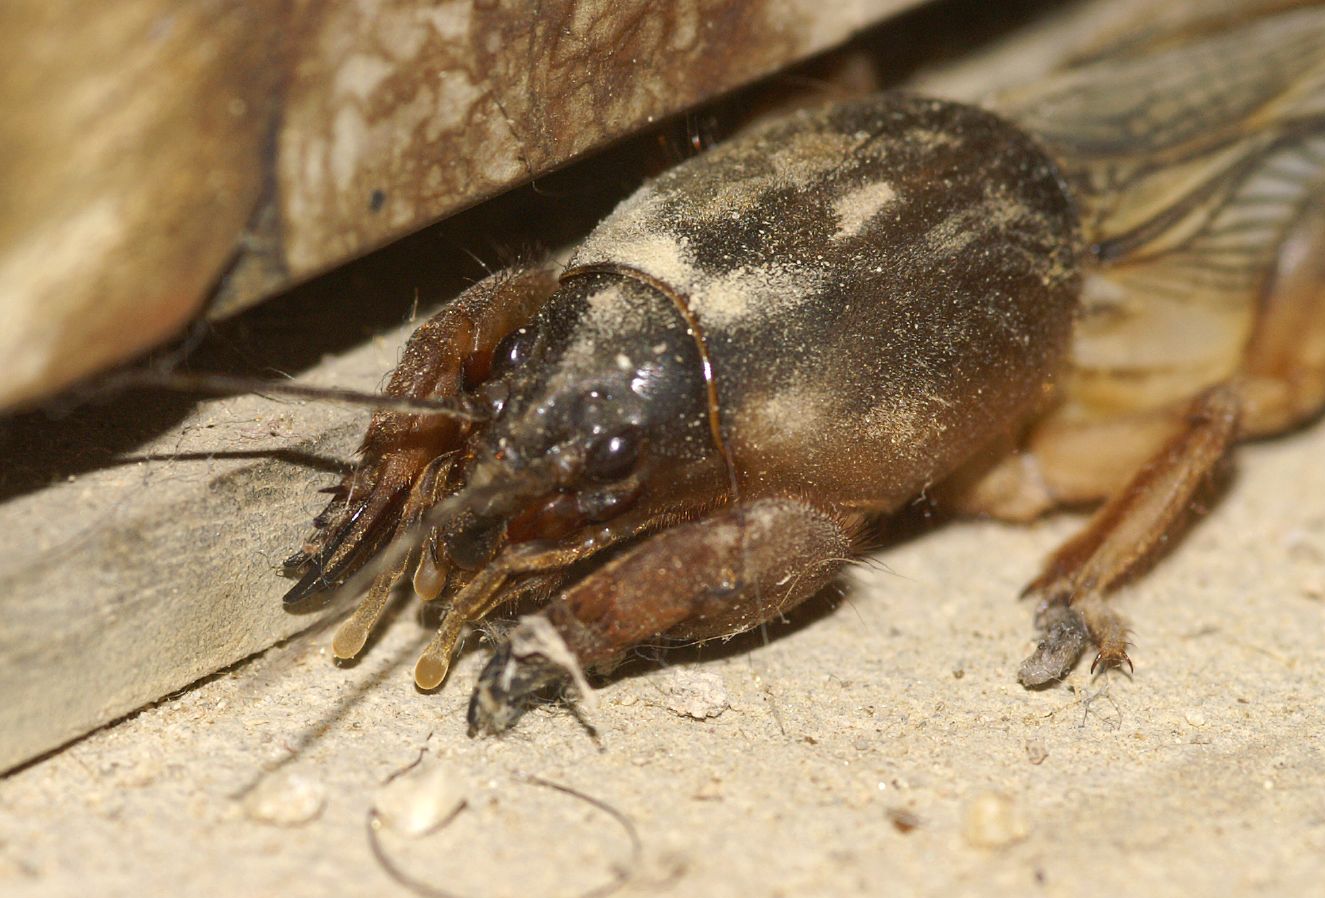 File:Close-up of mole.jpg - Wikipedia